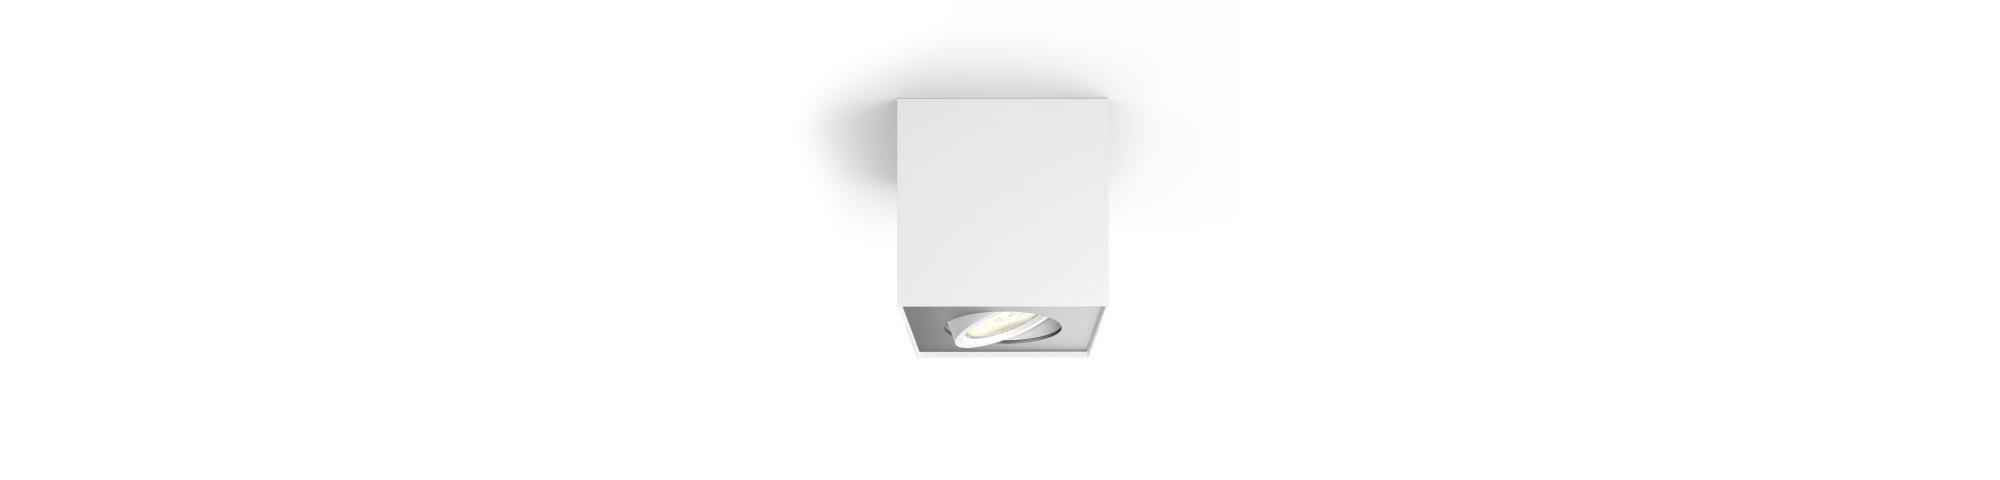 Philips myLiving Warmglow dimmable light Box single spot light